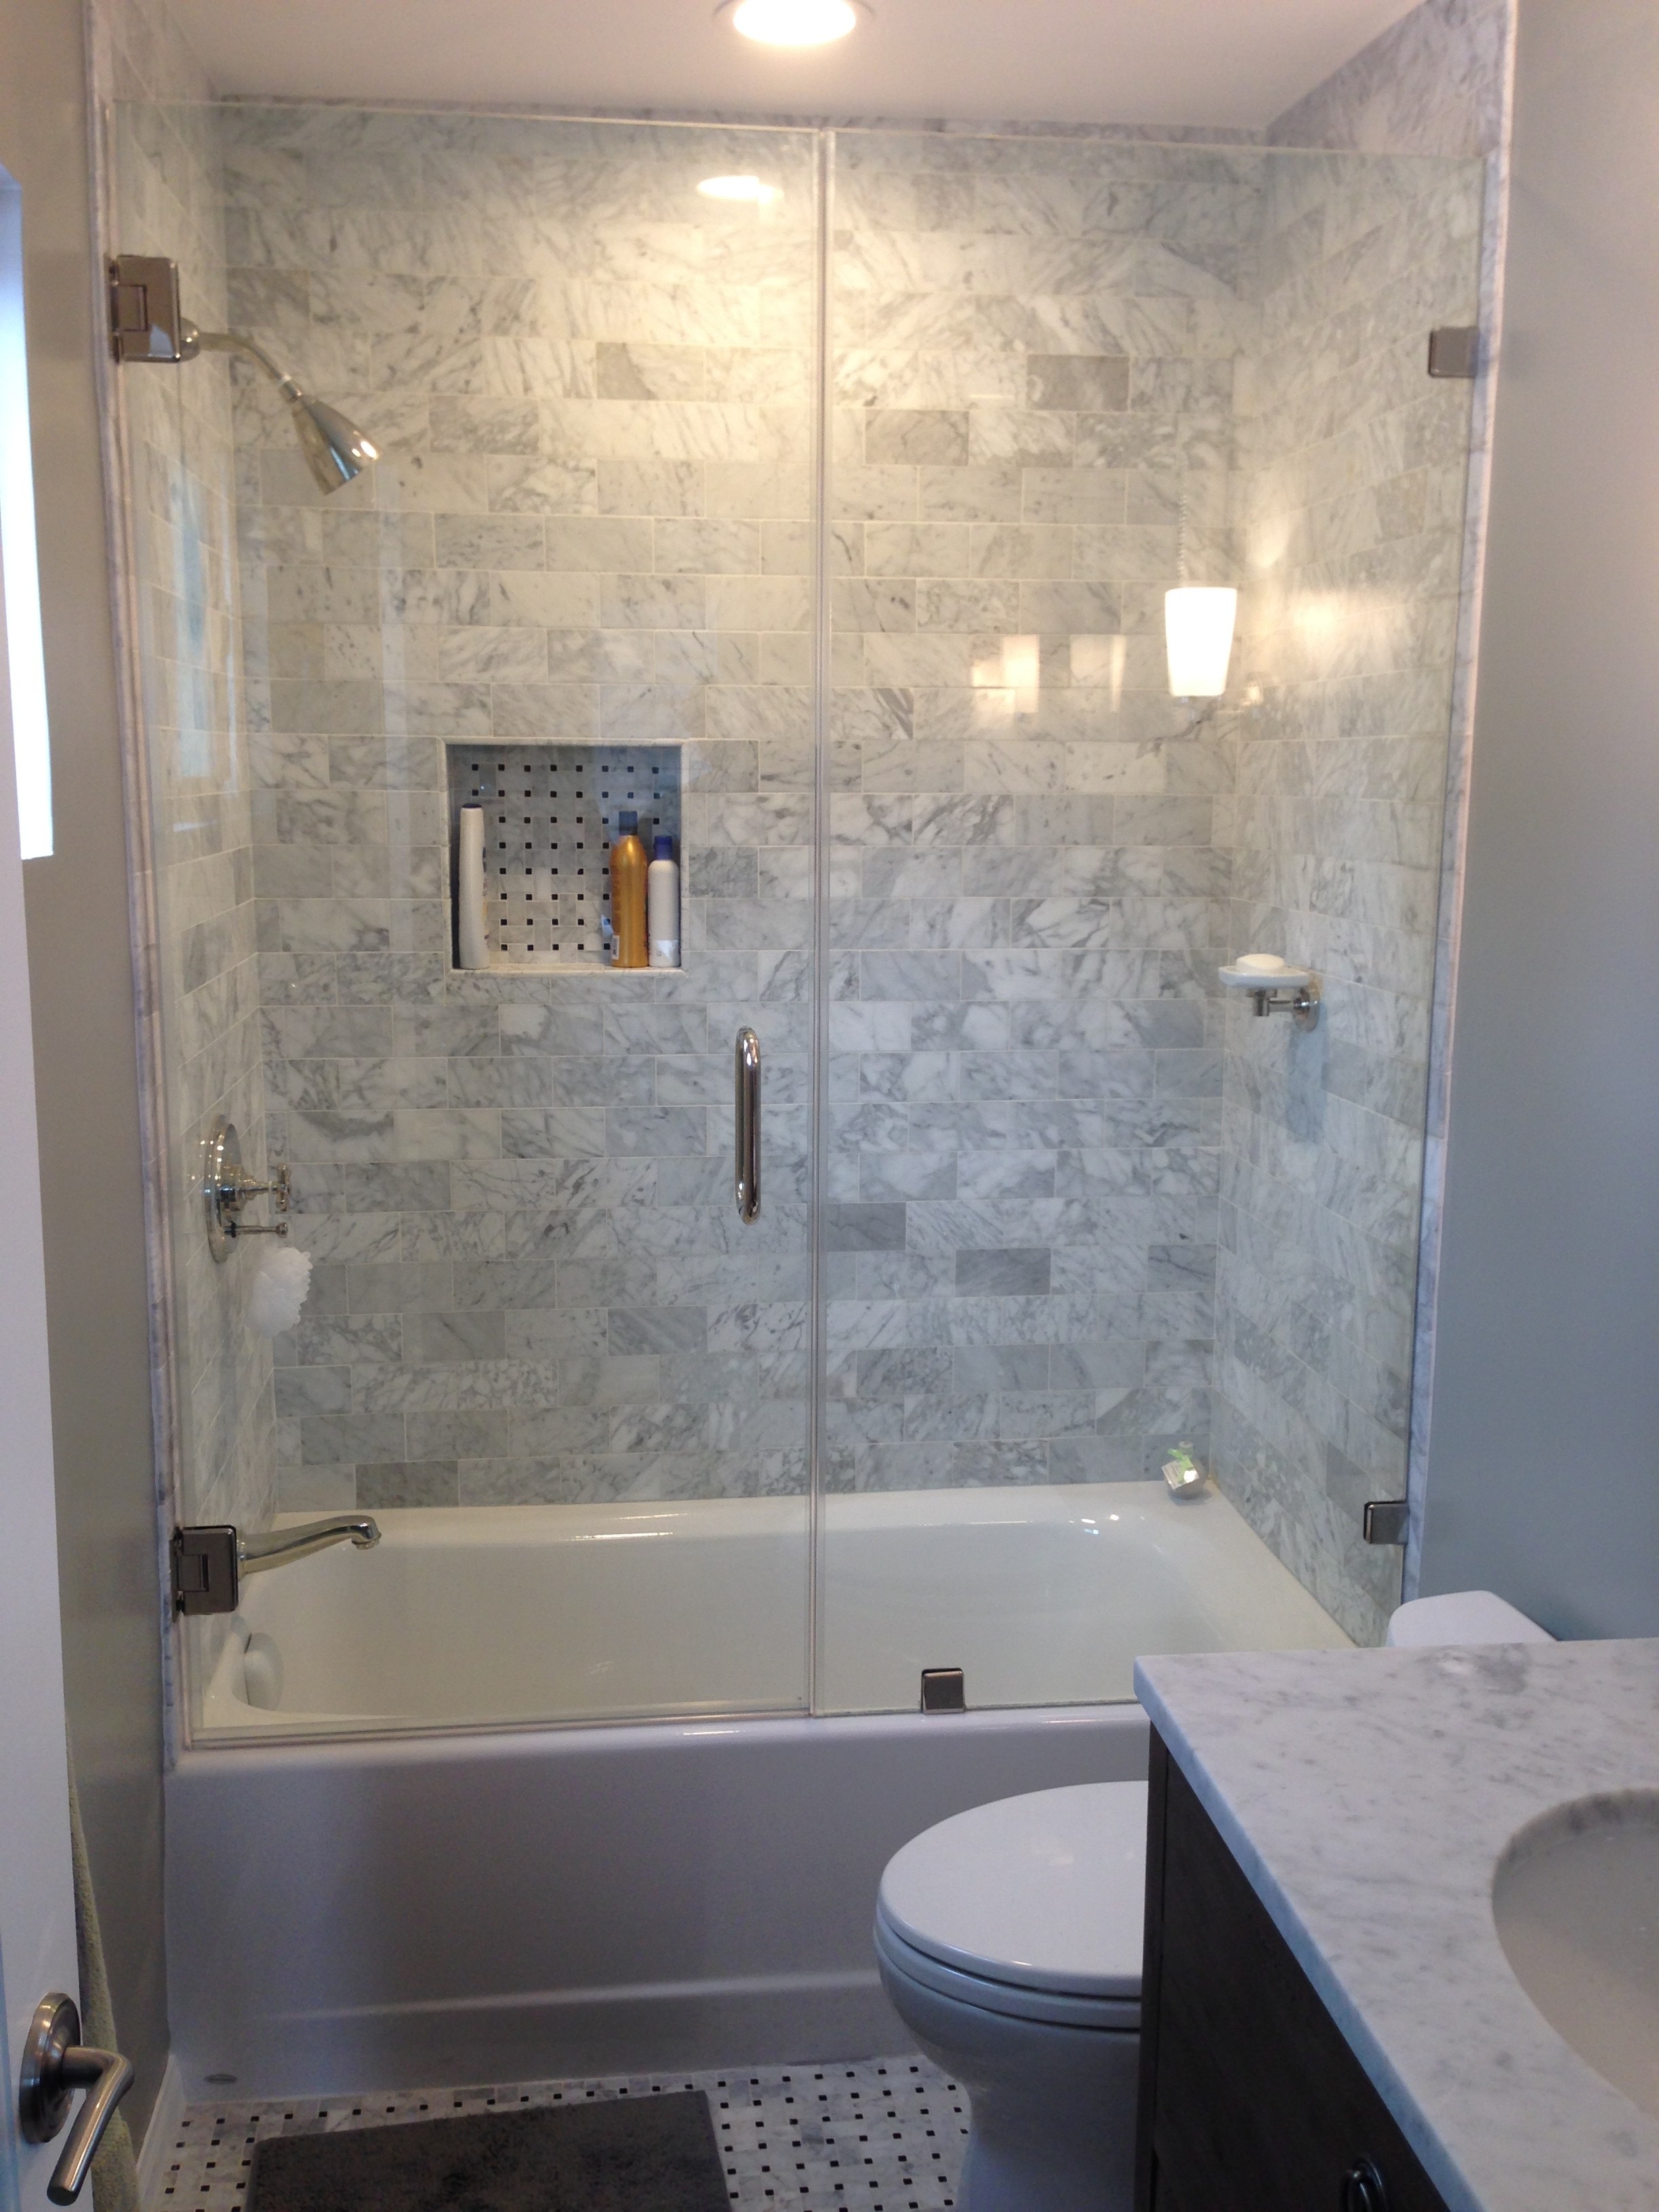 Stunning Bathroom Tile Design Ideas For Small Bathrooms To bathroom tiles ideas for small bathrooms